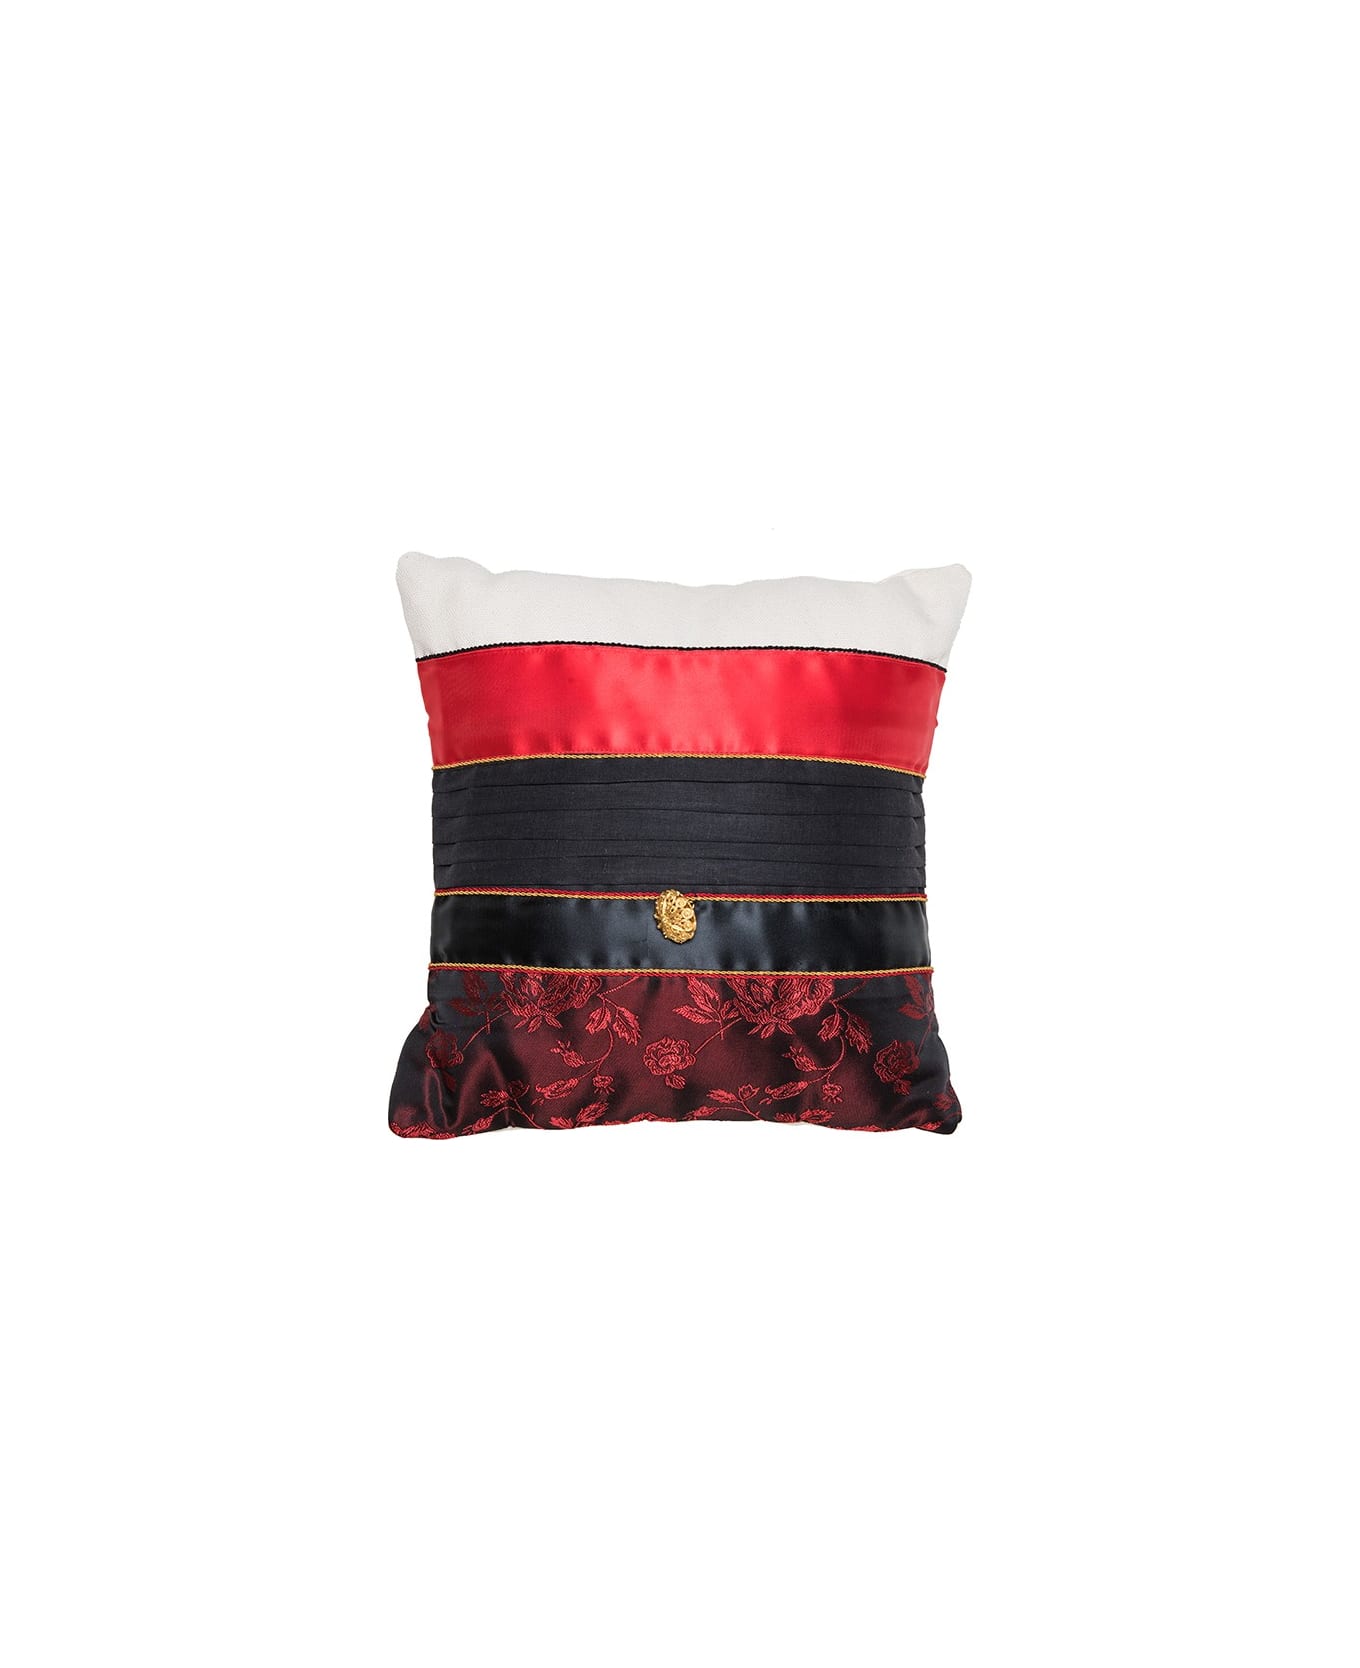 Le Botteghe su Gologone Cushions Costumbres 40x40 Cm - Red Fantasy クッション